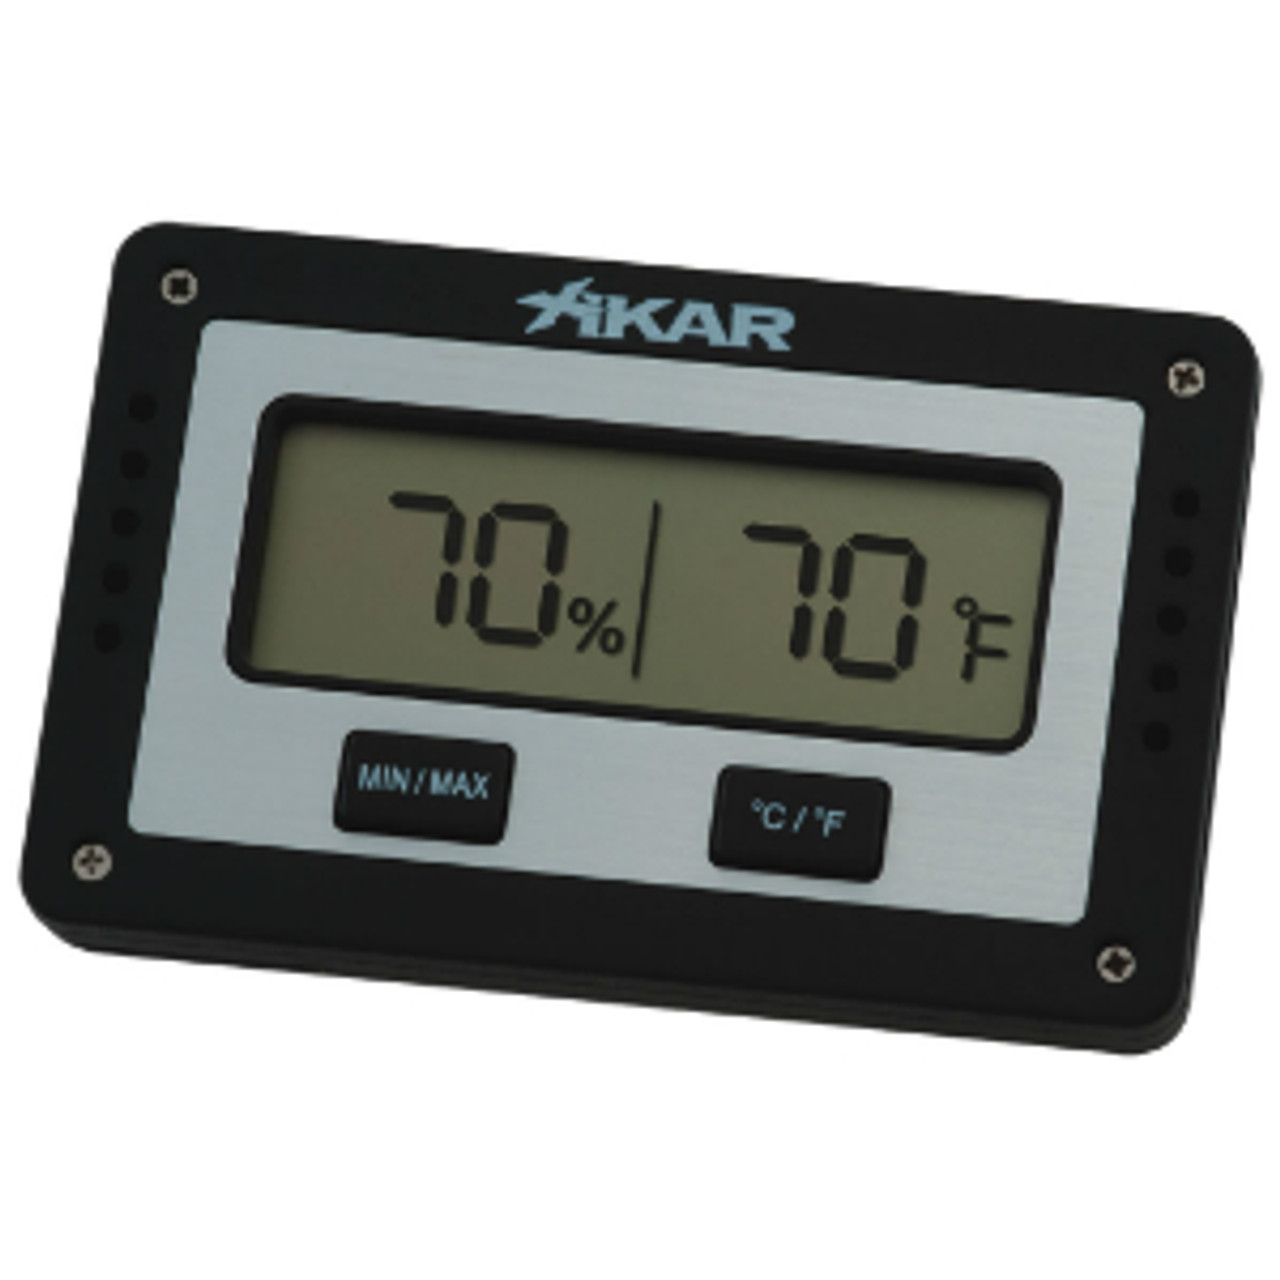 Xikar Hygrometer